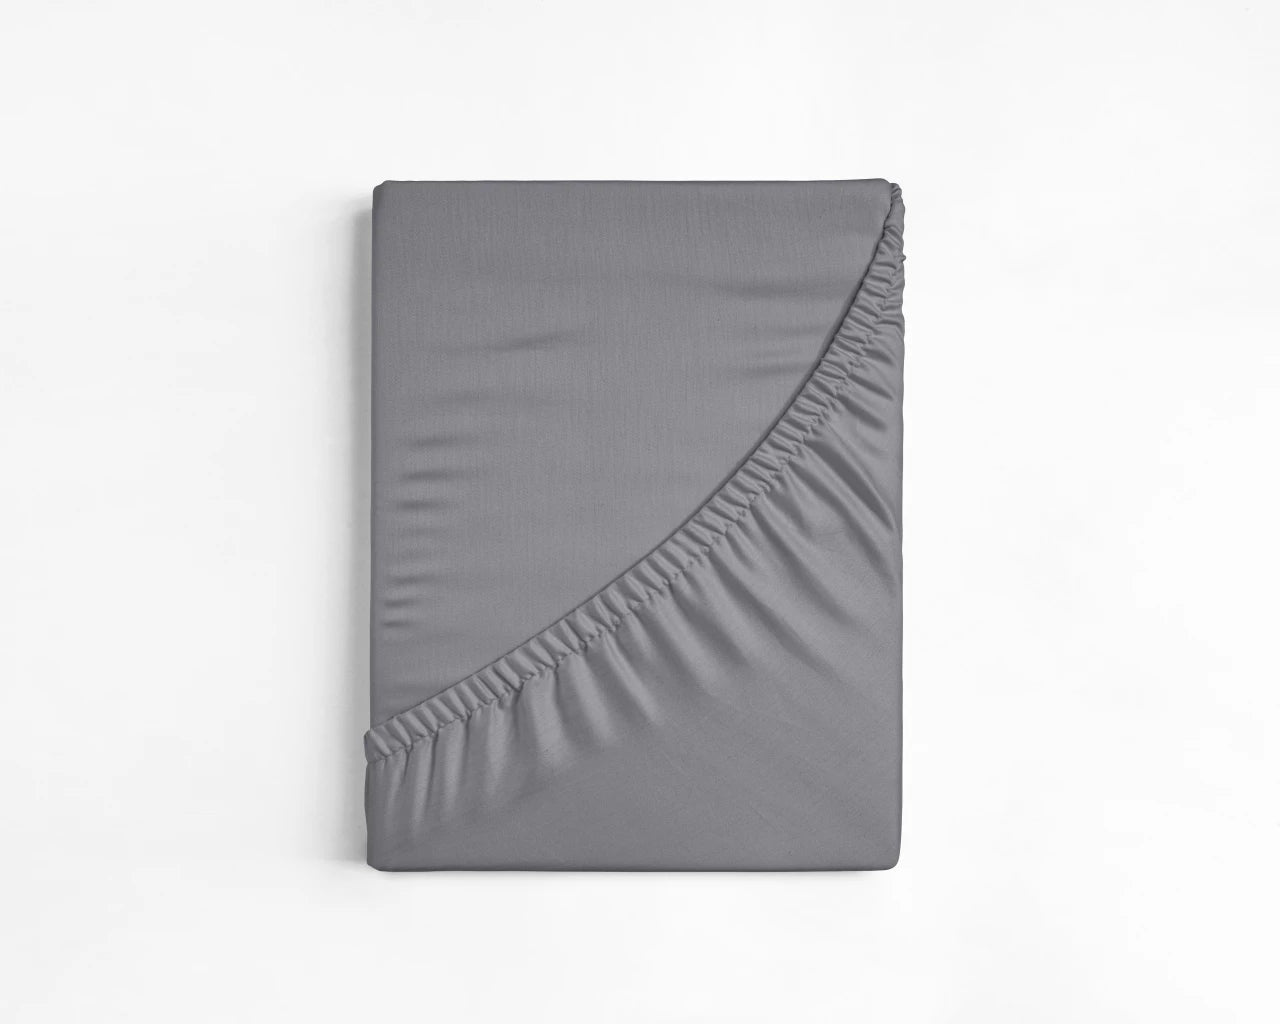 ULLVIDE Fitted sheet, gray, Queen - IKEA